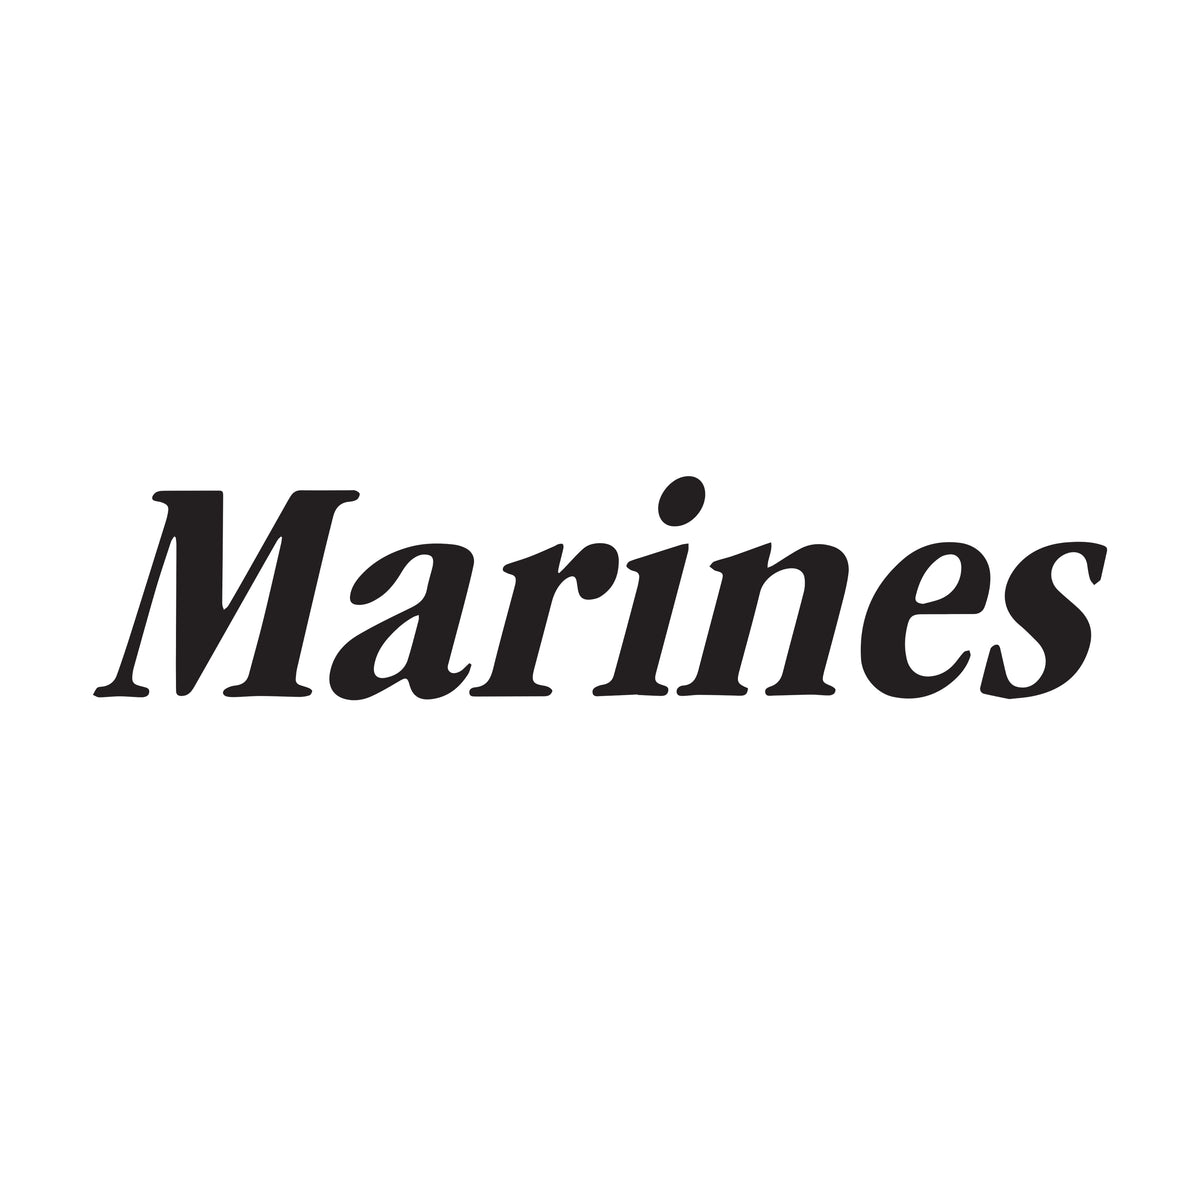 Italicized Marines Silver Performance Long Sleeve Tee